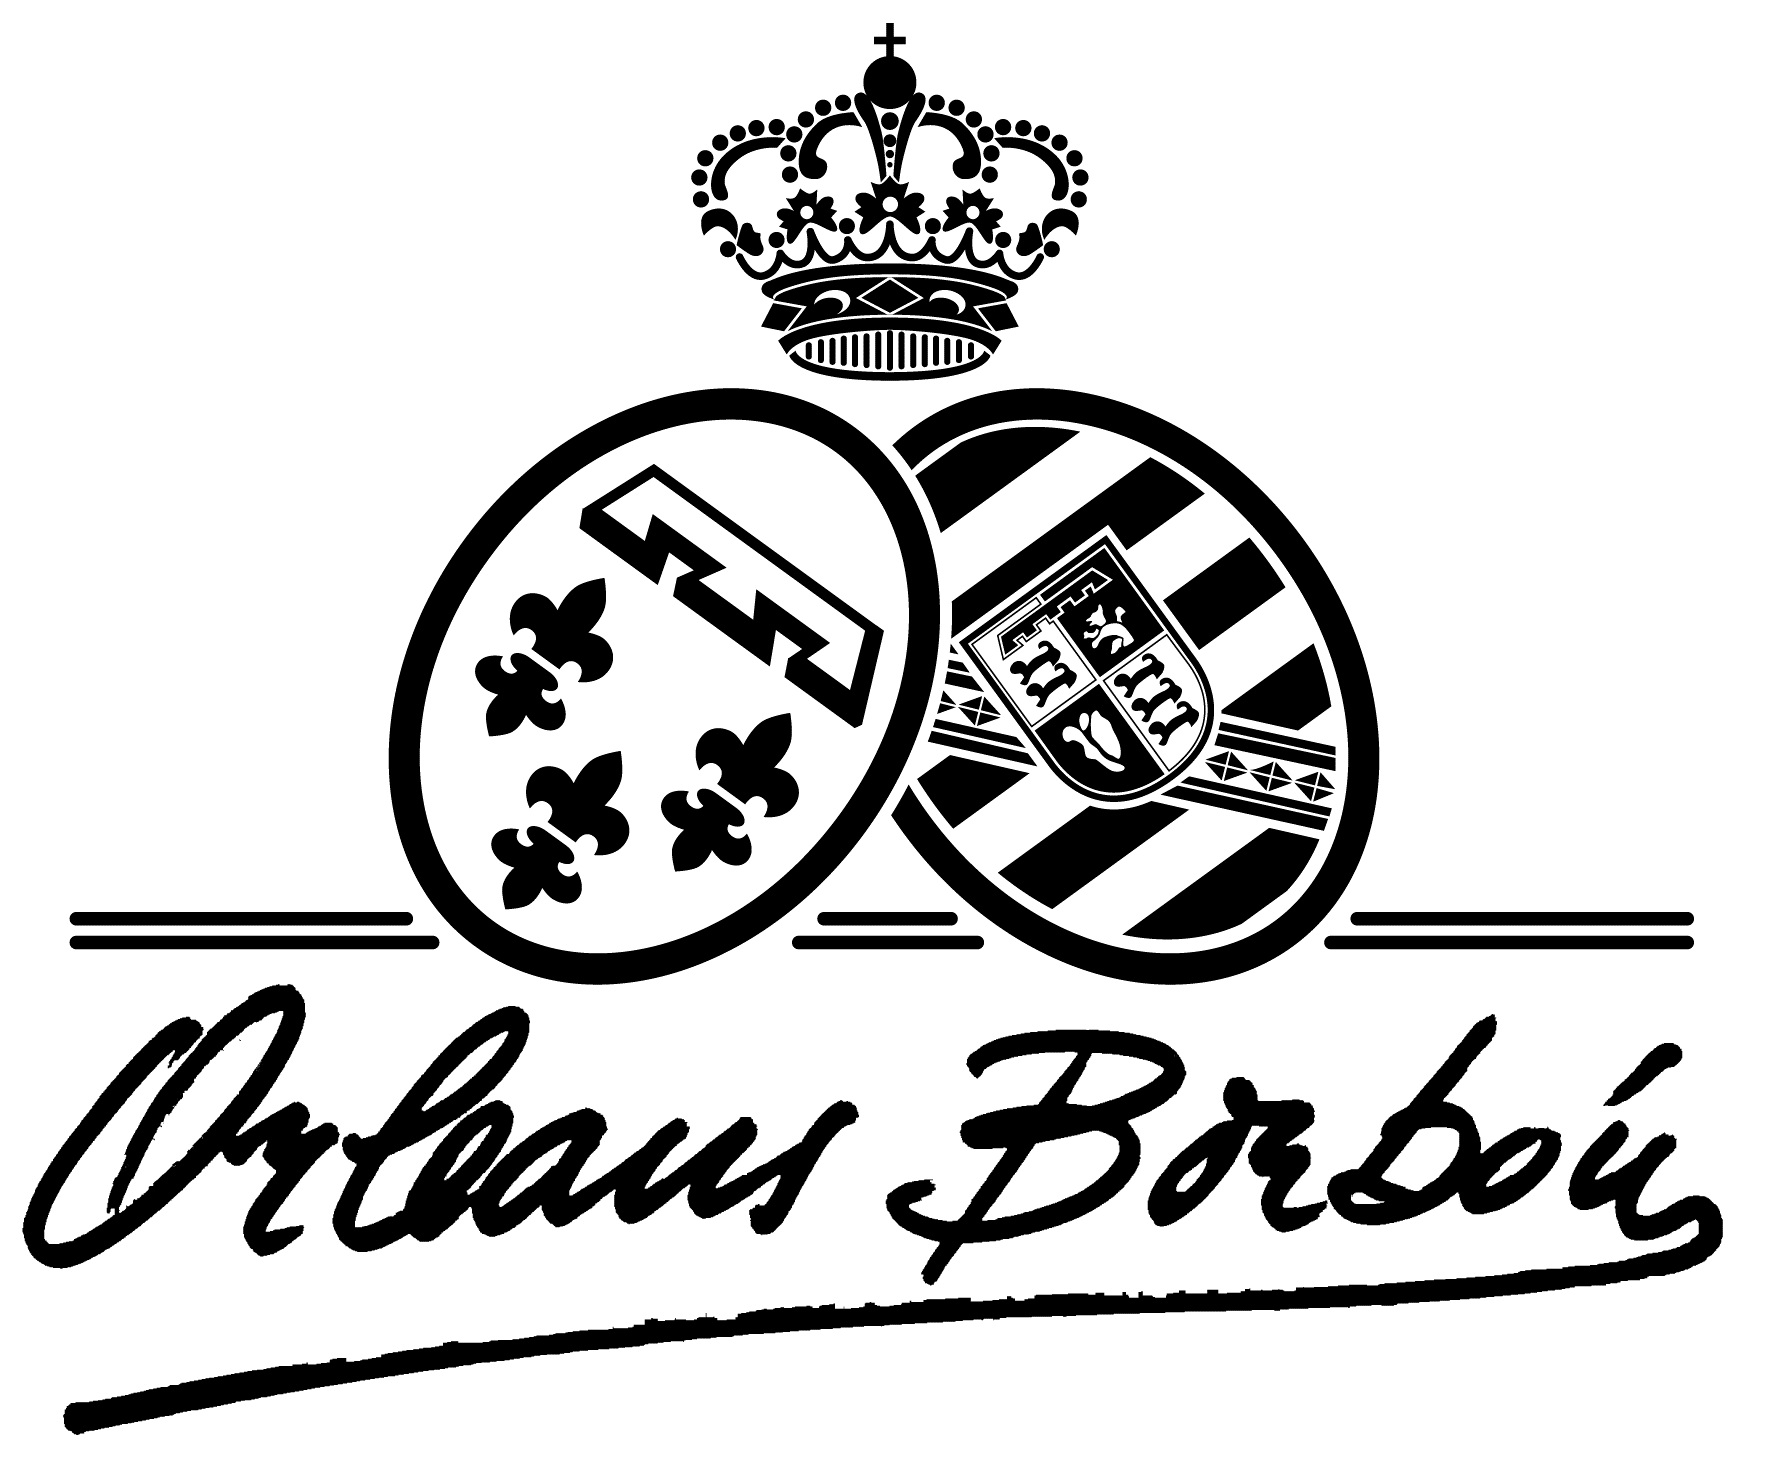 Logo from winery B. de los Infantes de Orleans-Borbón, S.A.